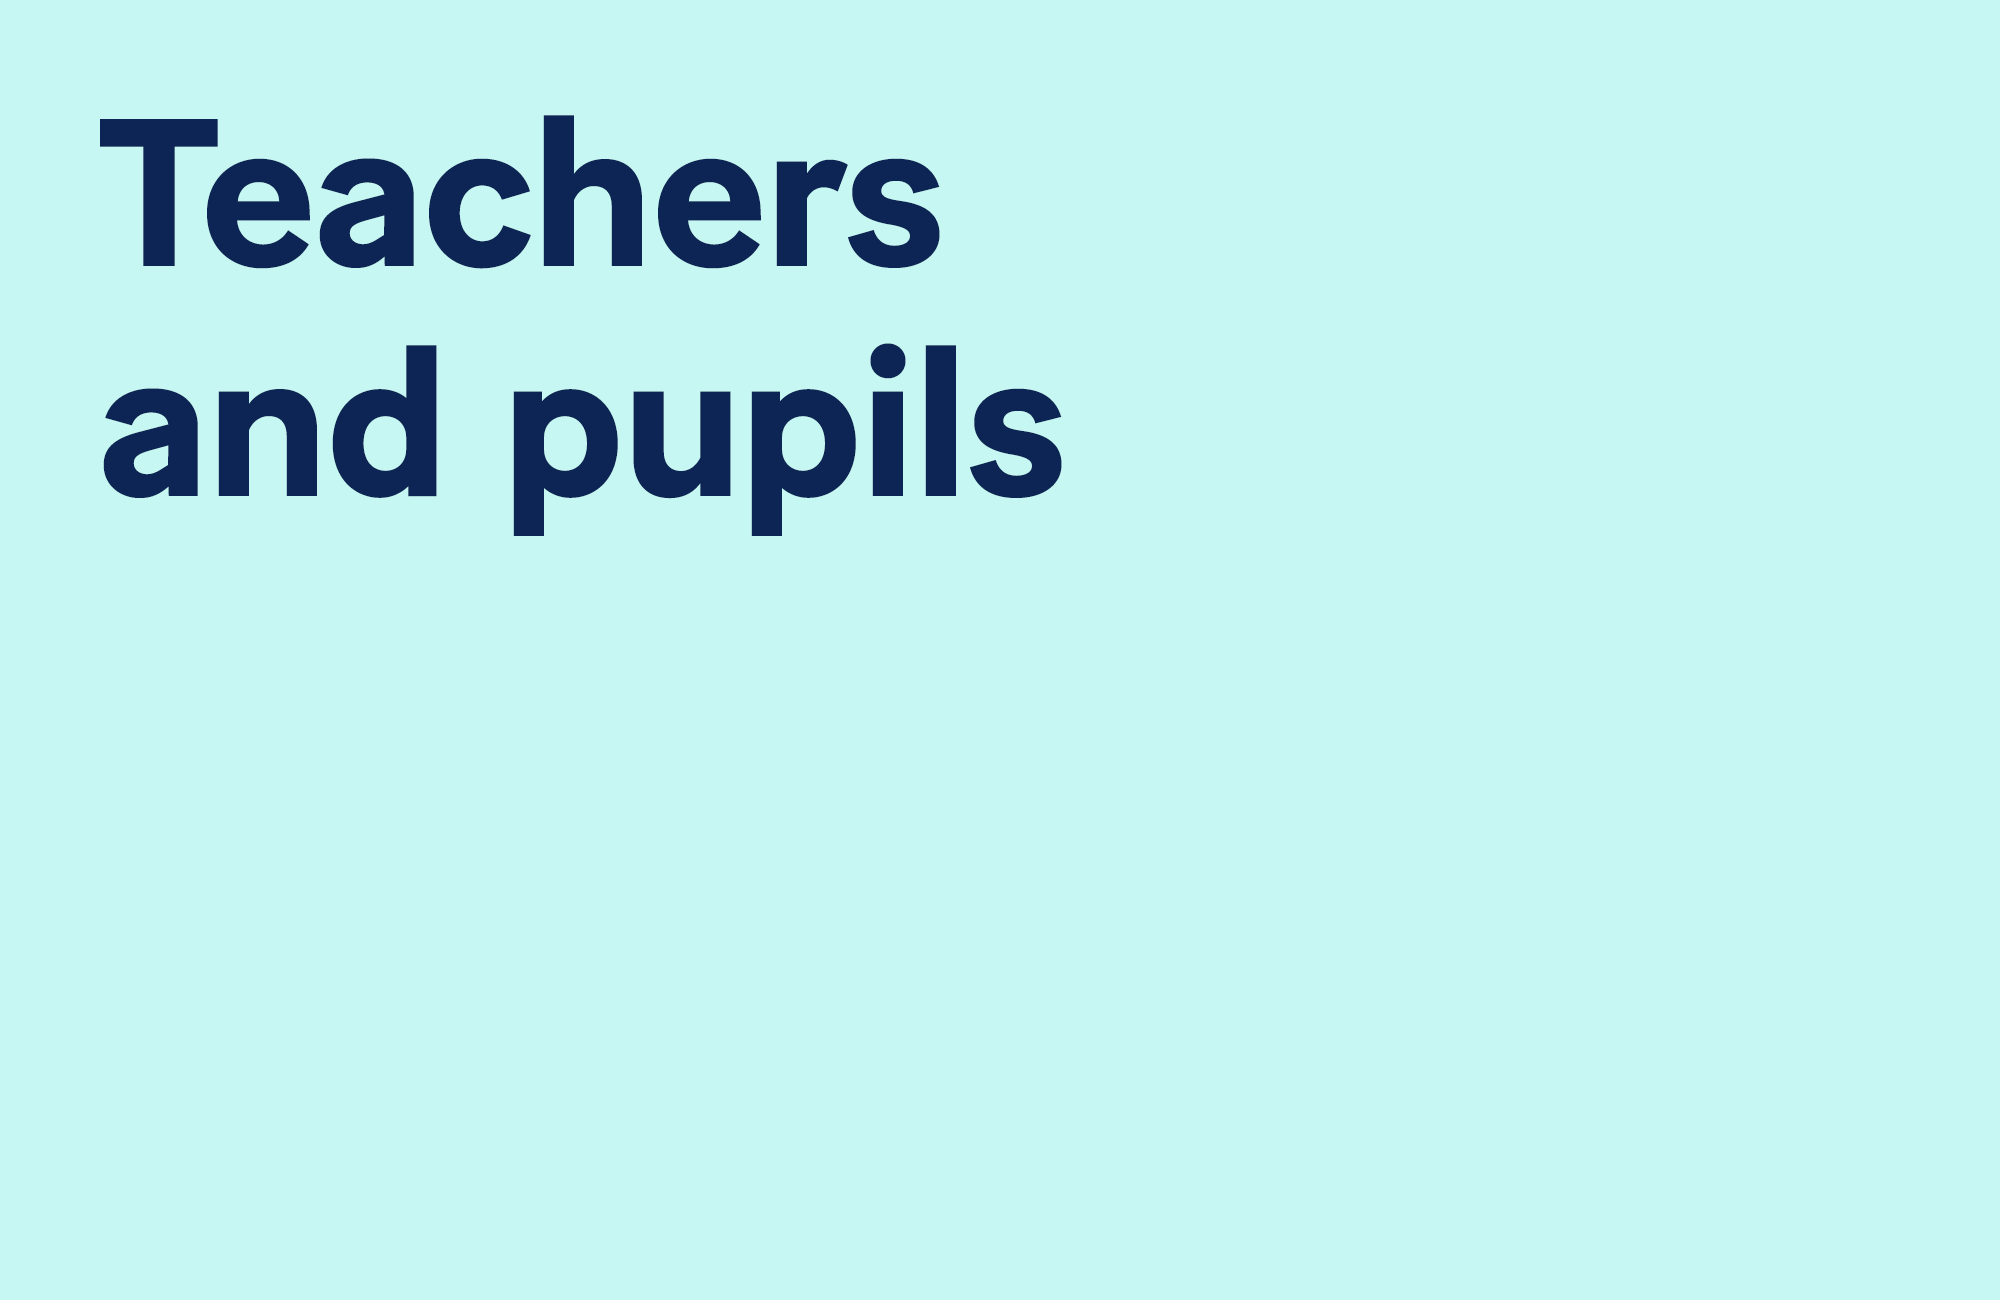 Teachers and pupils